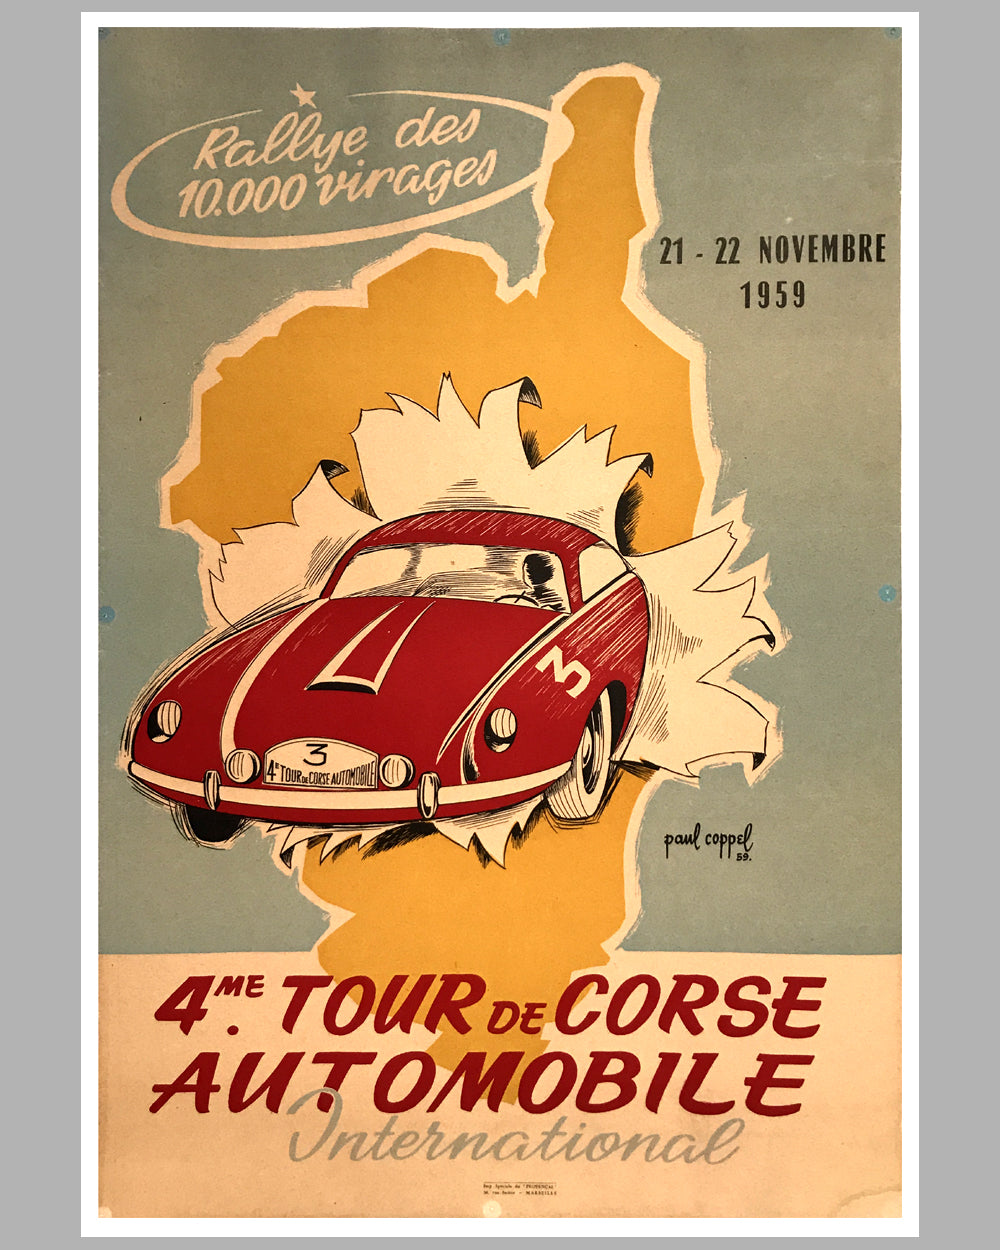 1959 - 4eme (4th) Tour de Corse Automobile International Rallye of the 10,000 turns poster